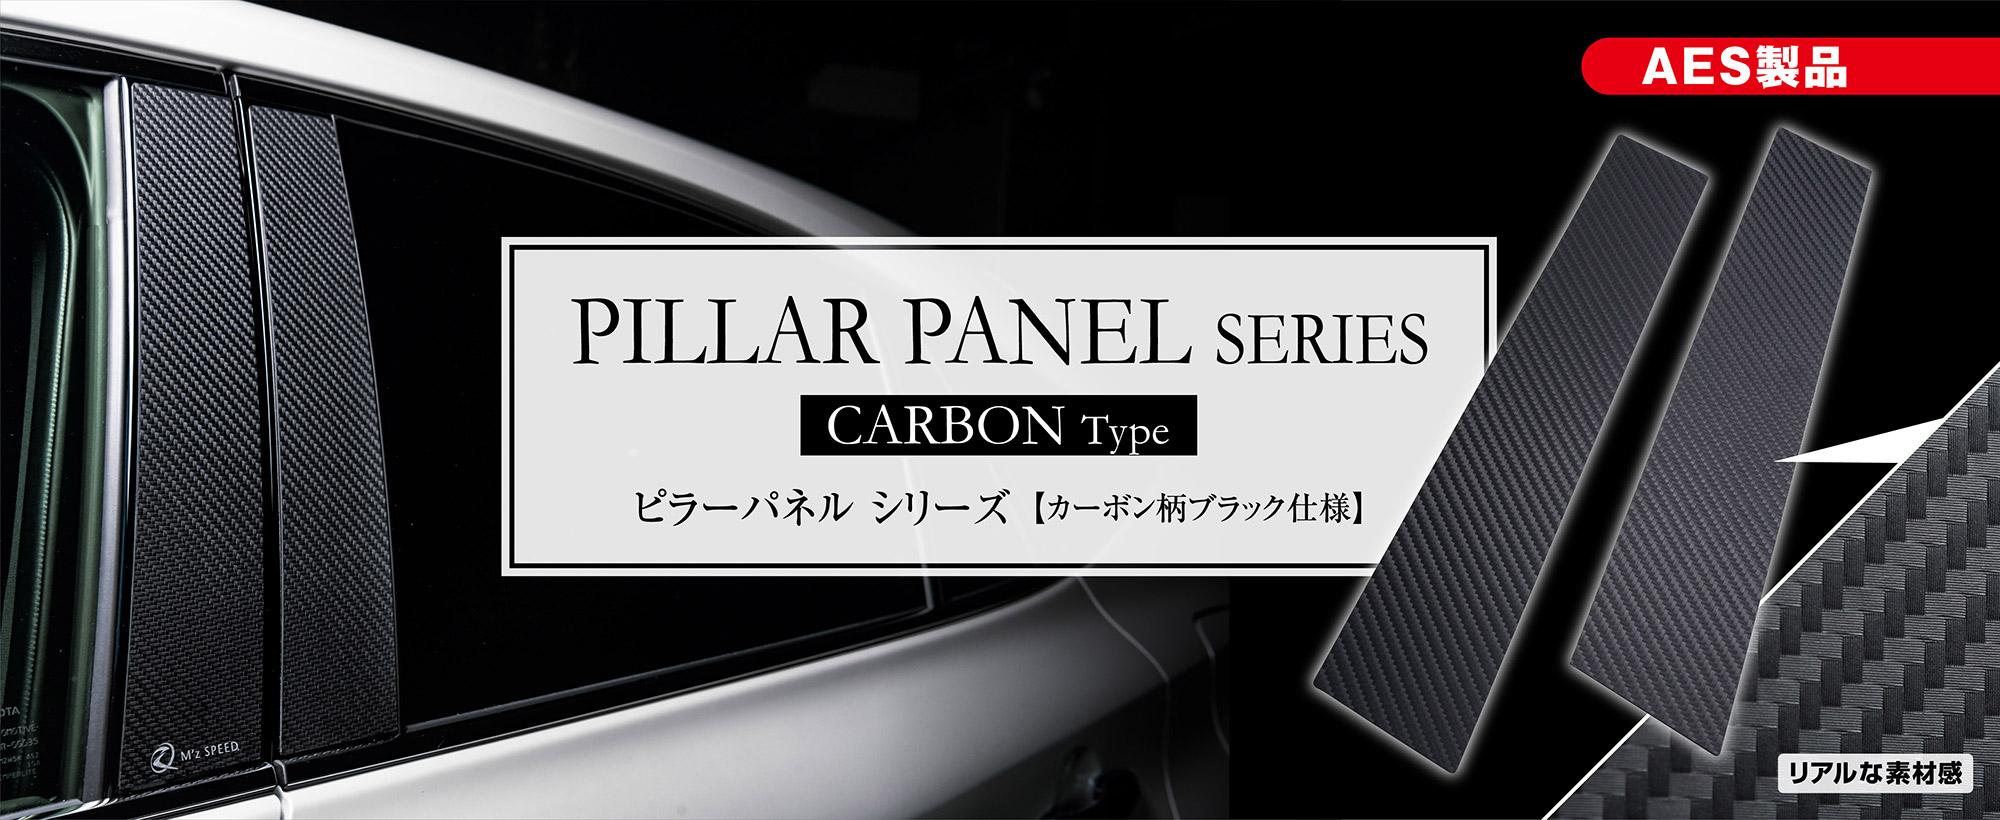 Pillar Panel Series